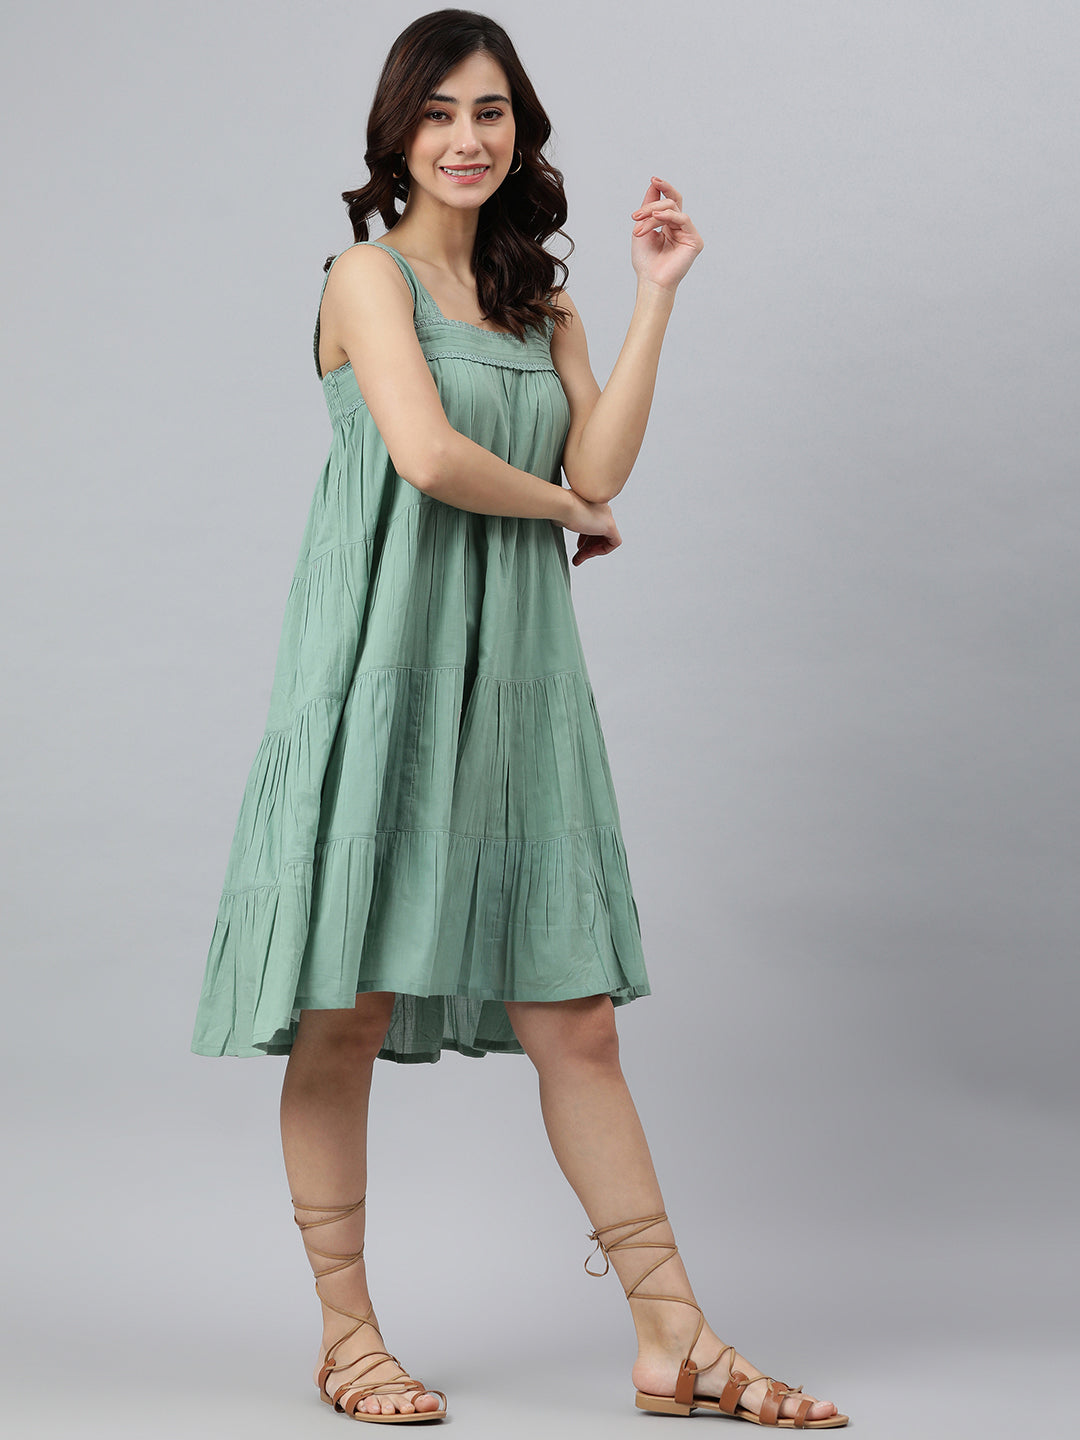 Women's Solid Mint Green Cotton Dress - Janasya